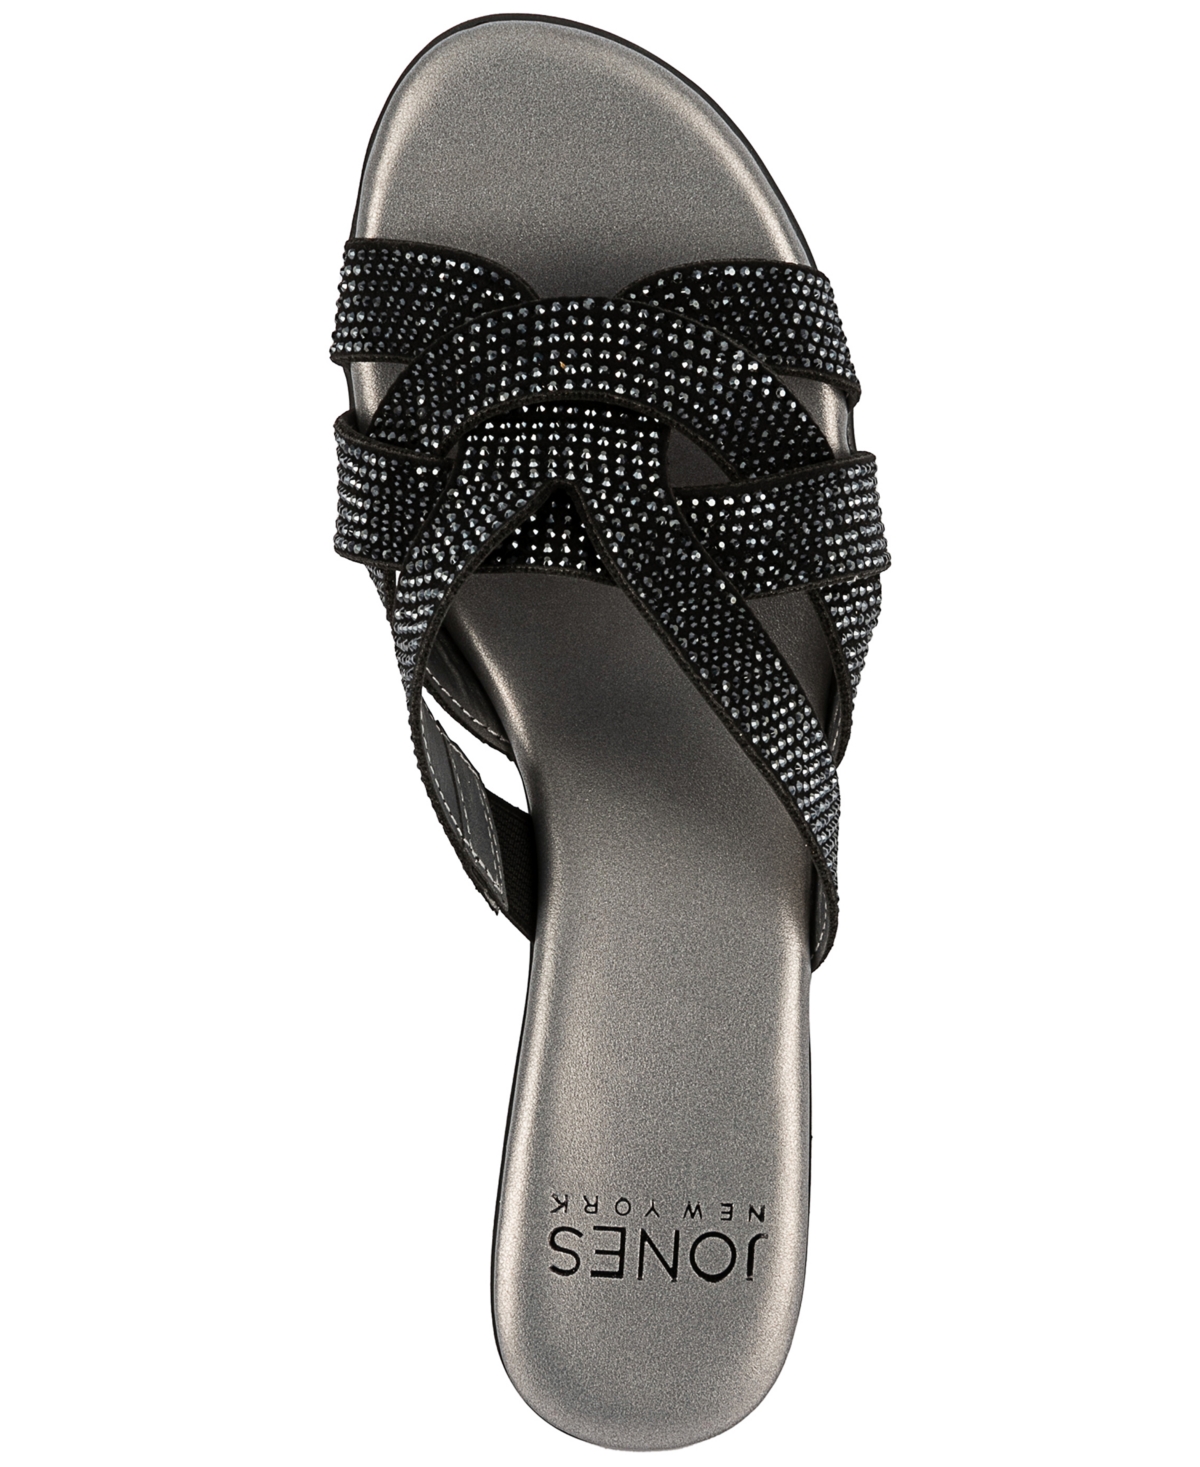 Shop Jones New York Enny Embellished Slide Sandals, Created For Macy's In Silver